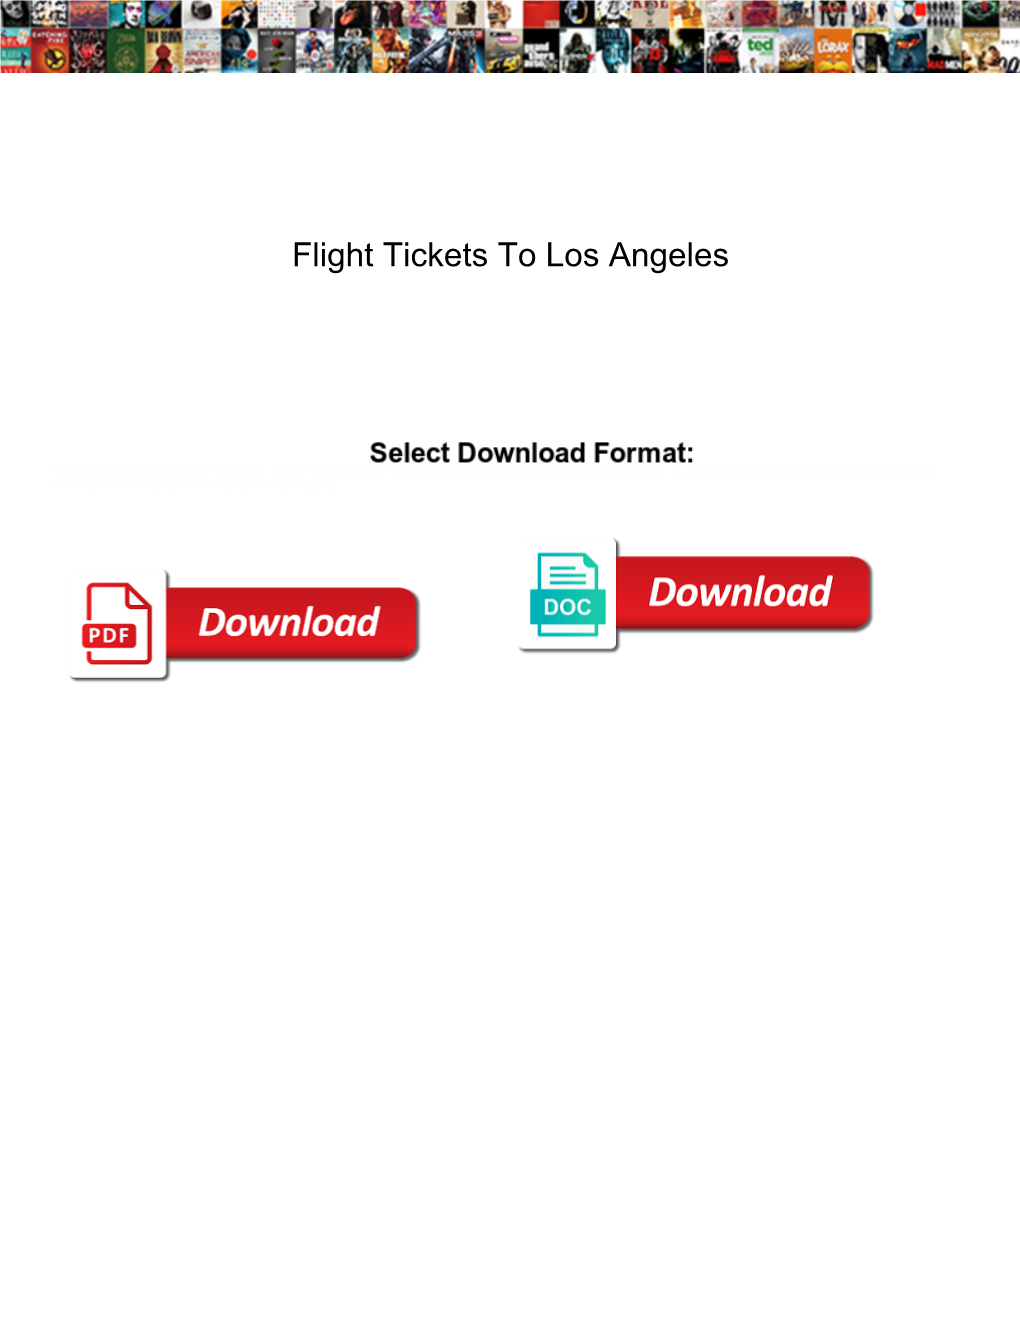 Flight Tickets to Los Angeles